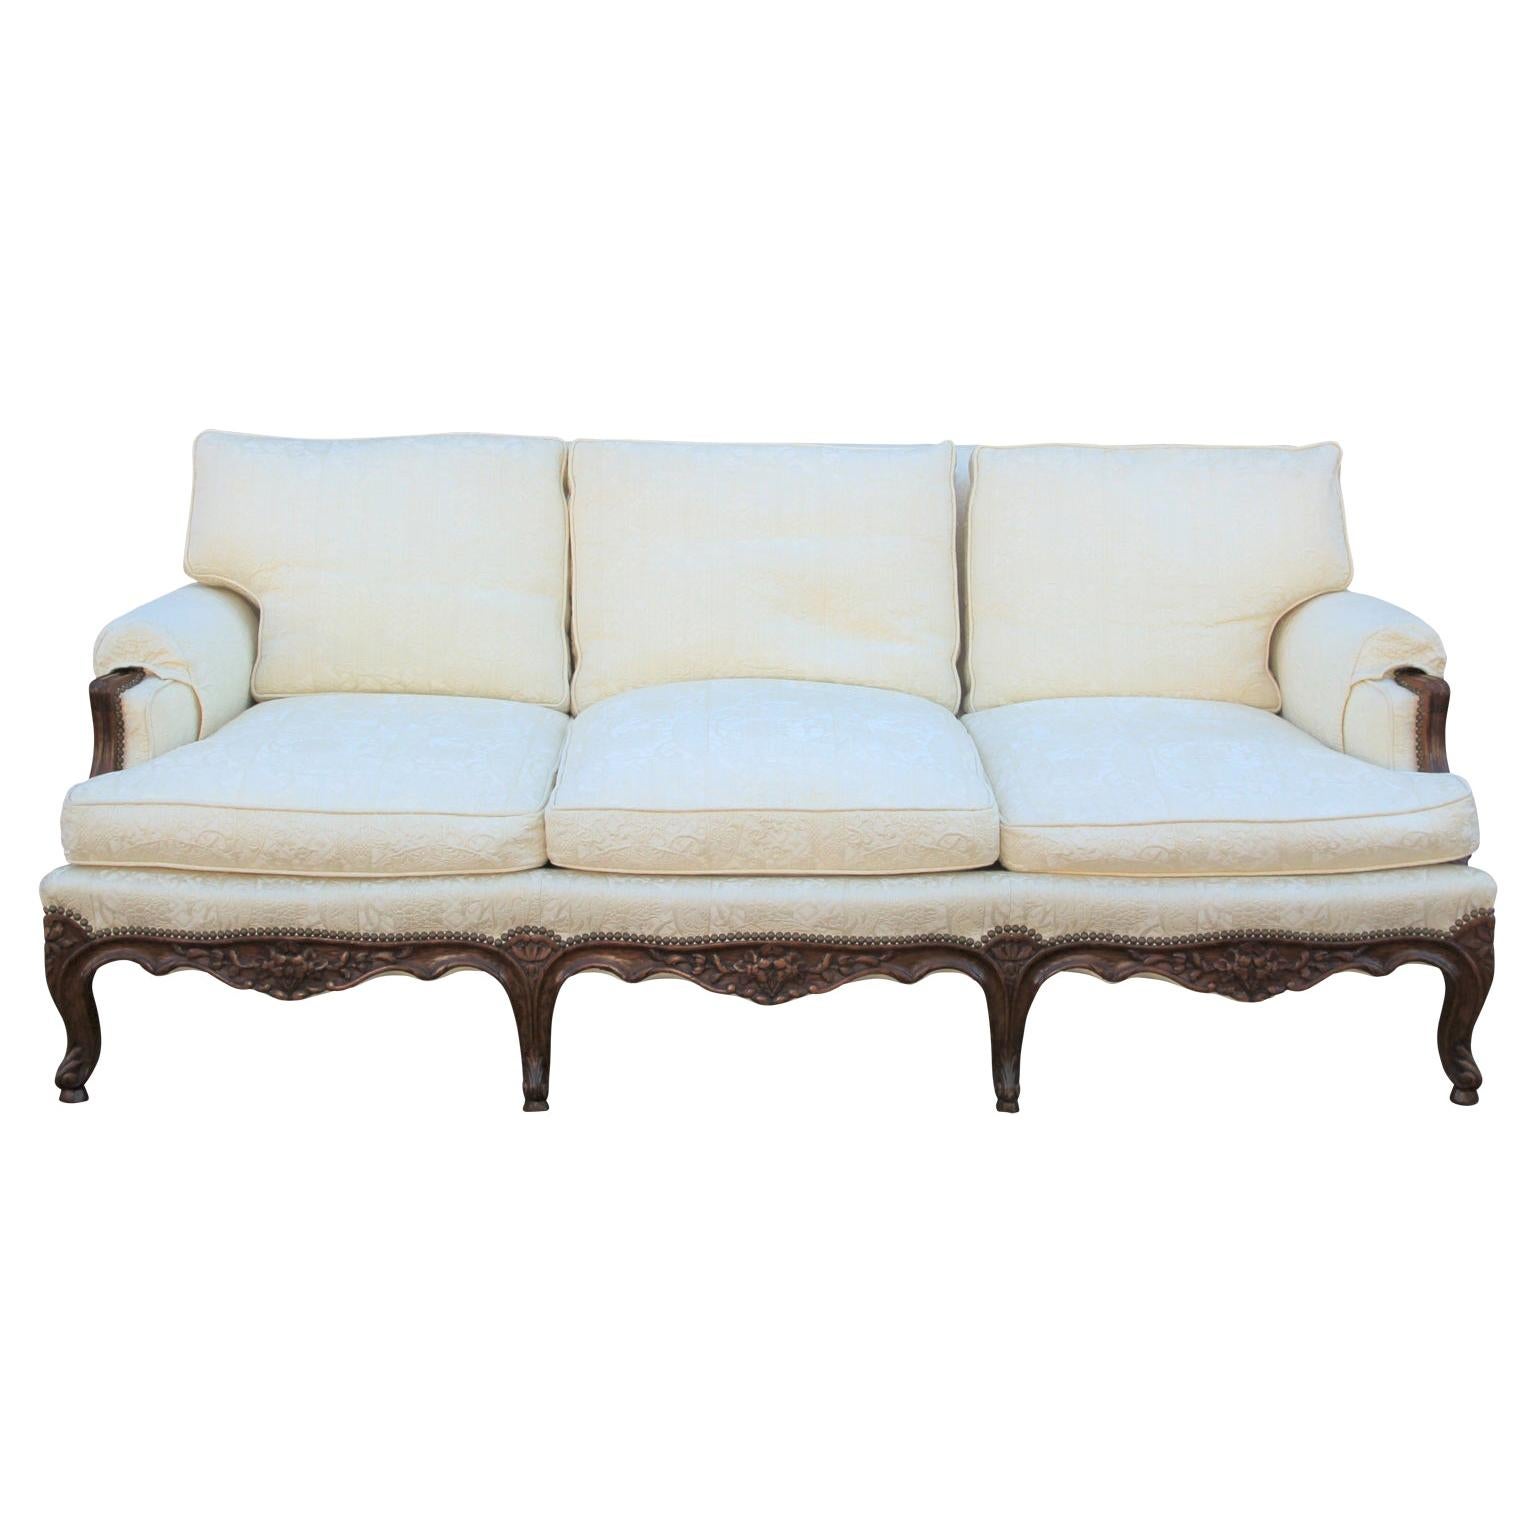 Wonderful Carved Italian Rococo Three-Seat Walnut Sofa